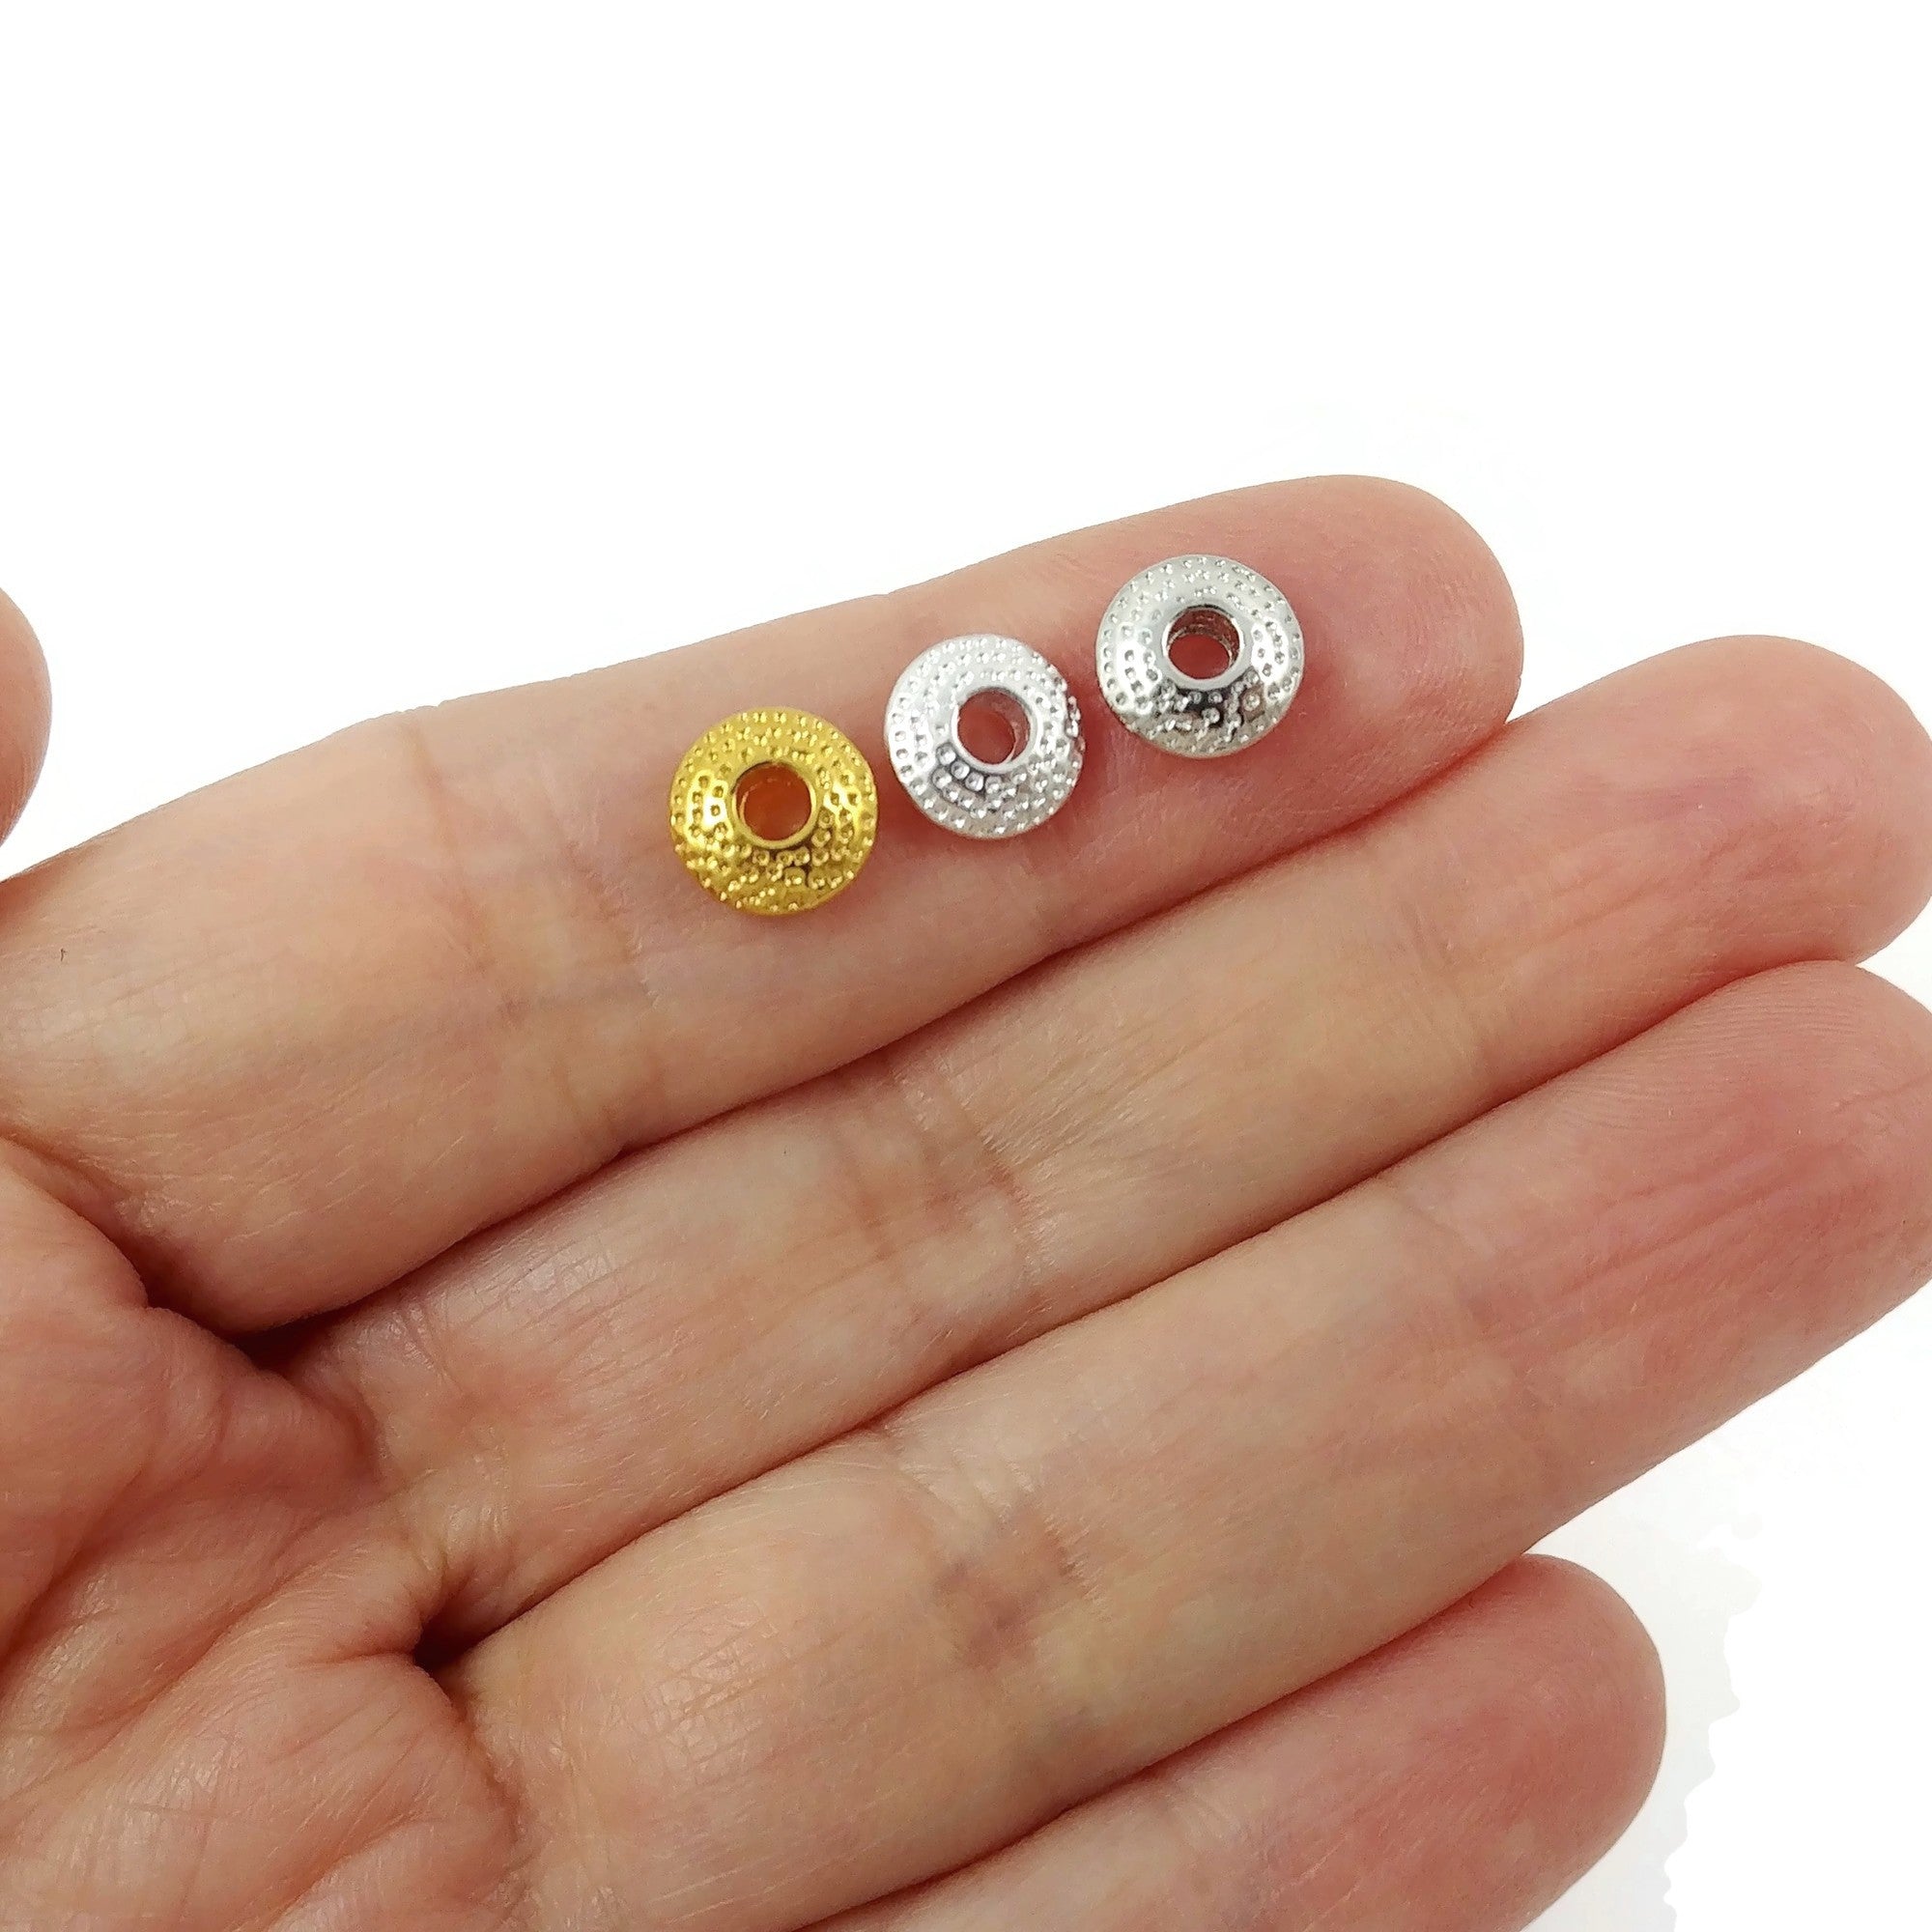 Perles rondelles en métal 8mm - Sans nickel, sans plomb et sans cadmium